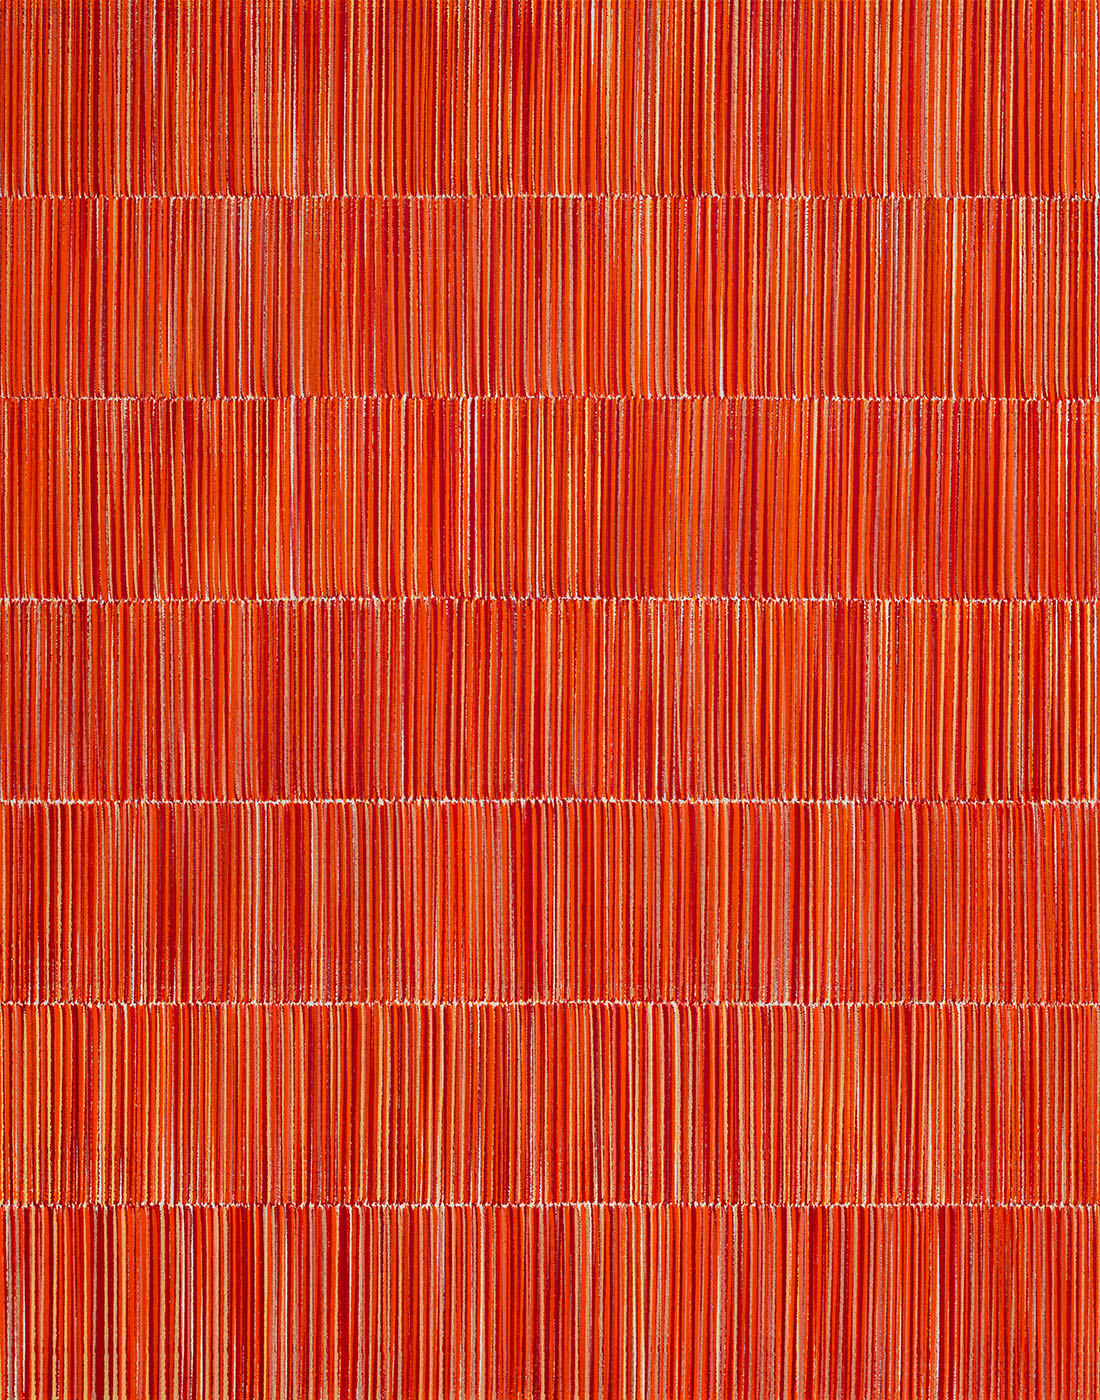 Nikola Dimitrov, FarbKlang II, 2019, Pigmente, Bindemittel auf Leinwand, 140 × 110 cm